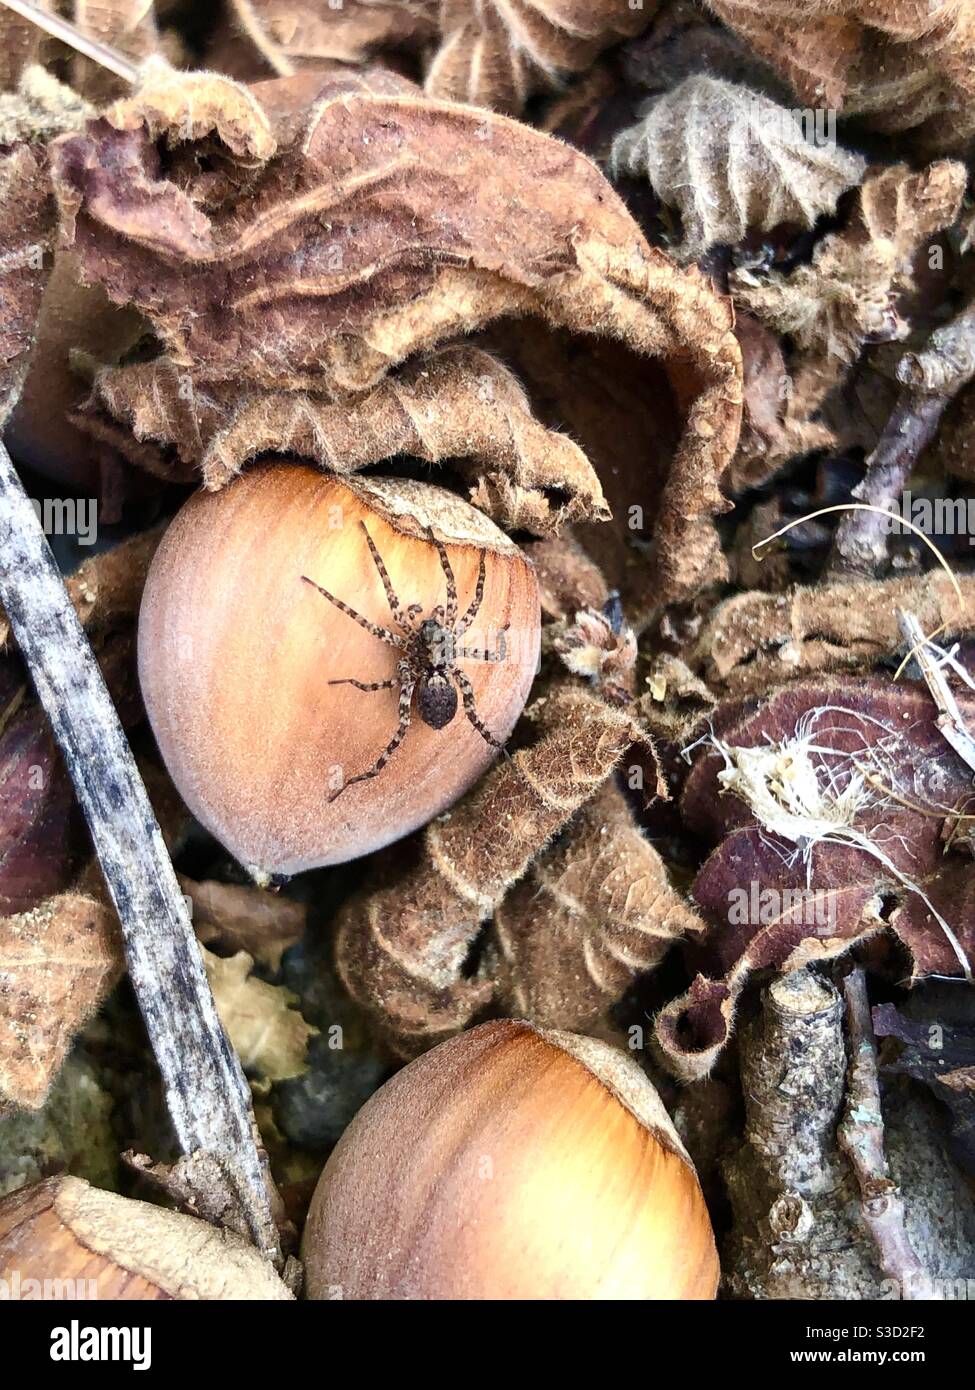 Spider on a fallen hazelnut Stock Photo